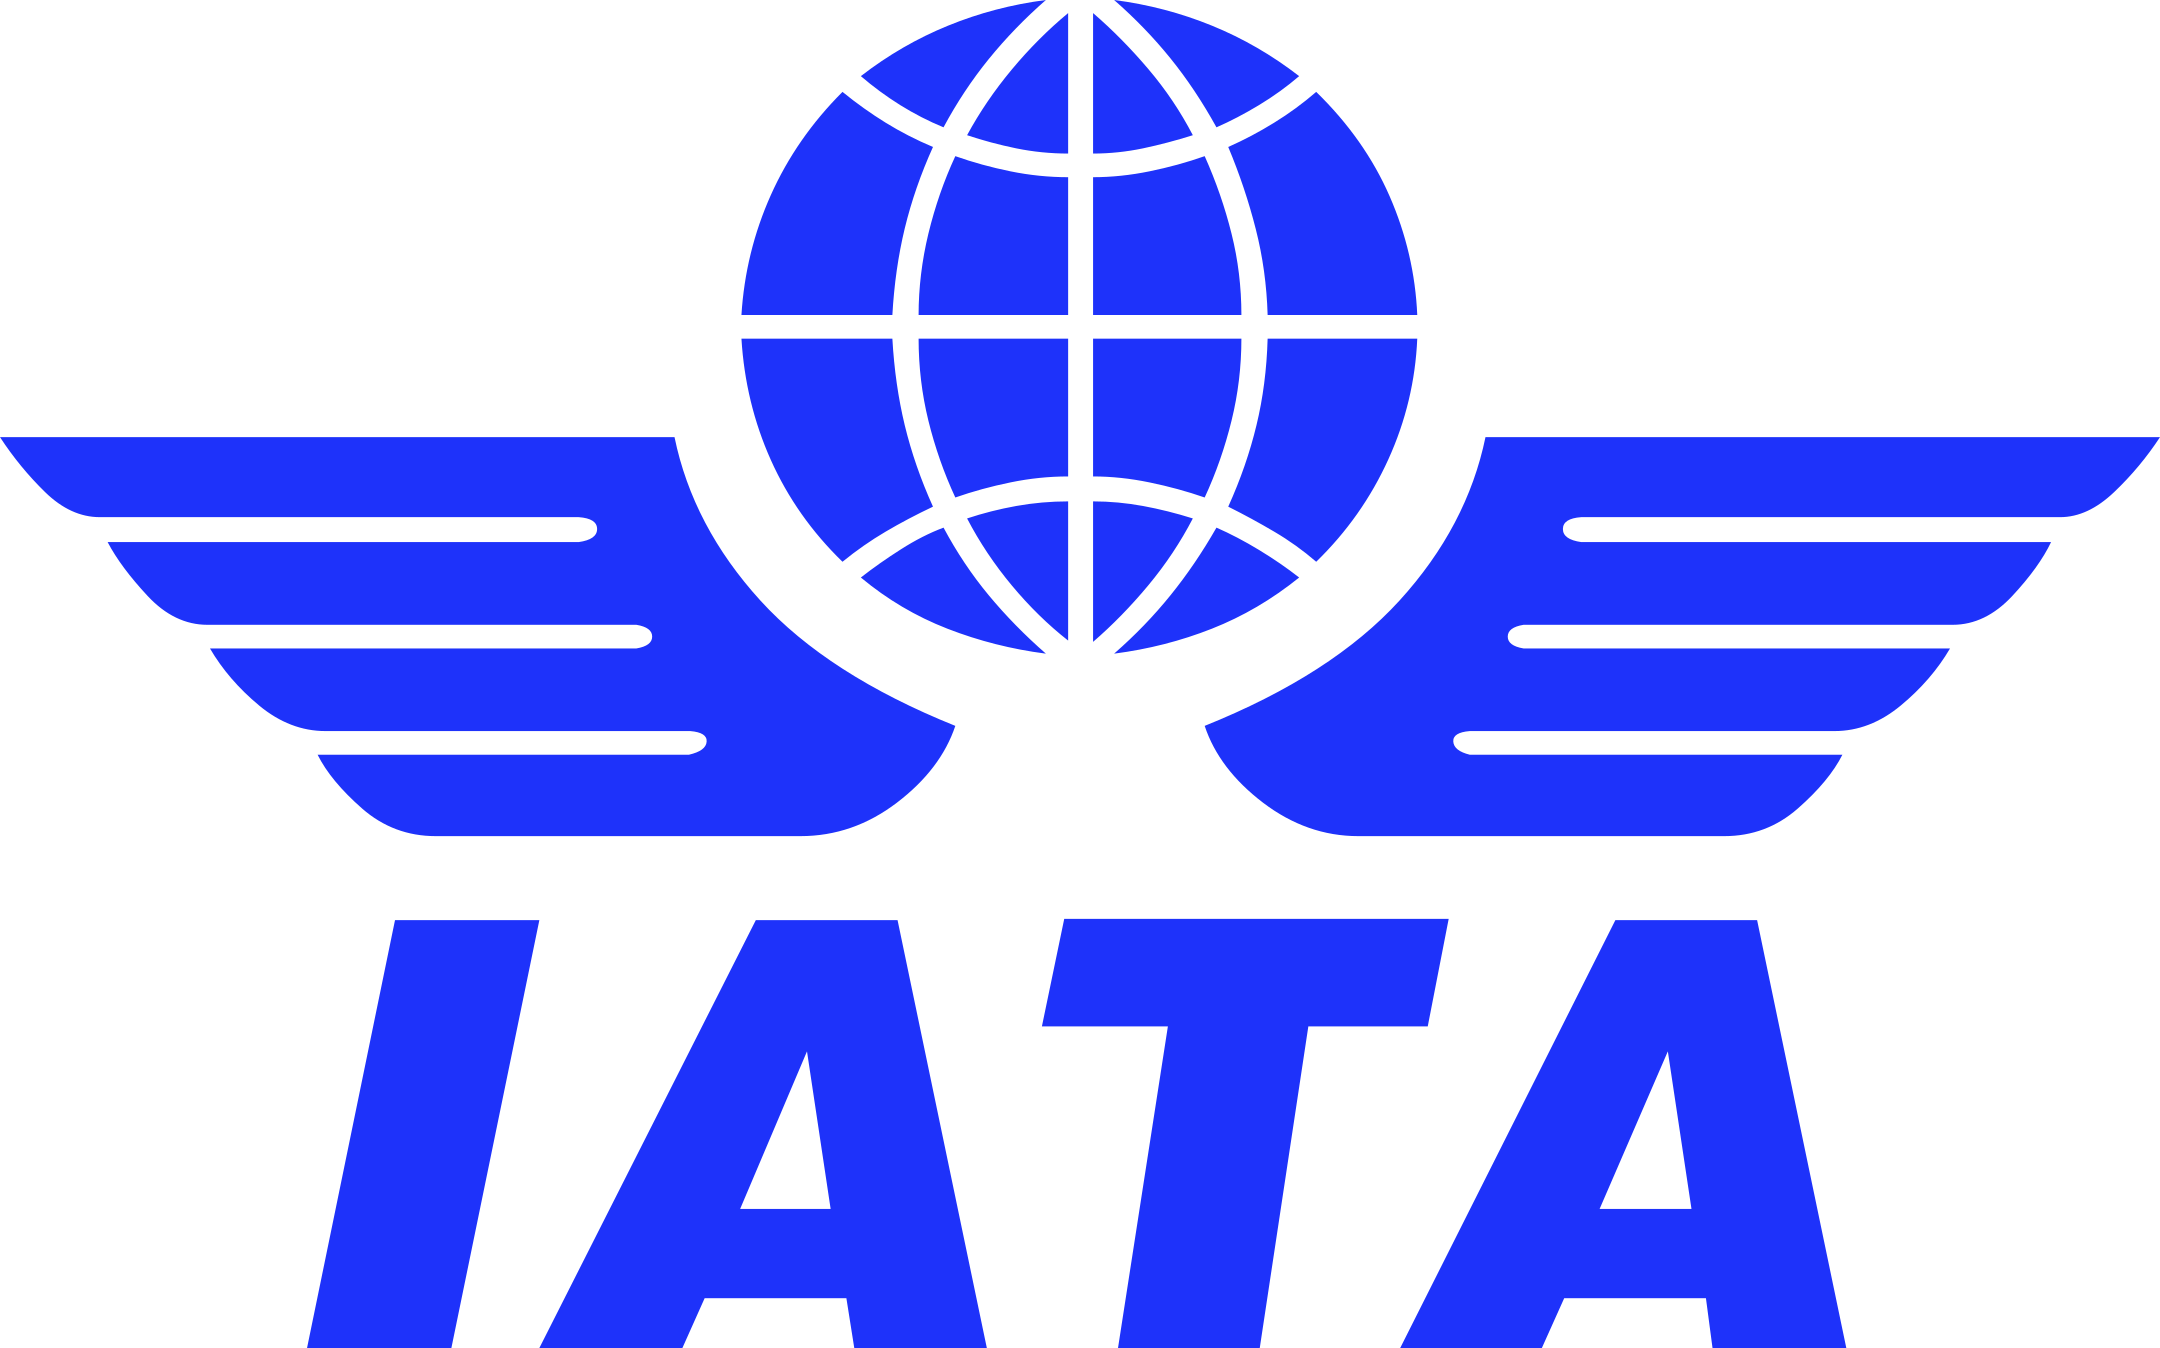 iata logo 1 1 - IATA Logo